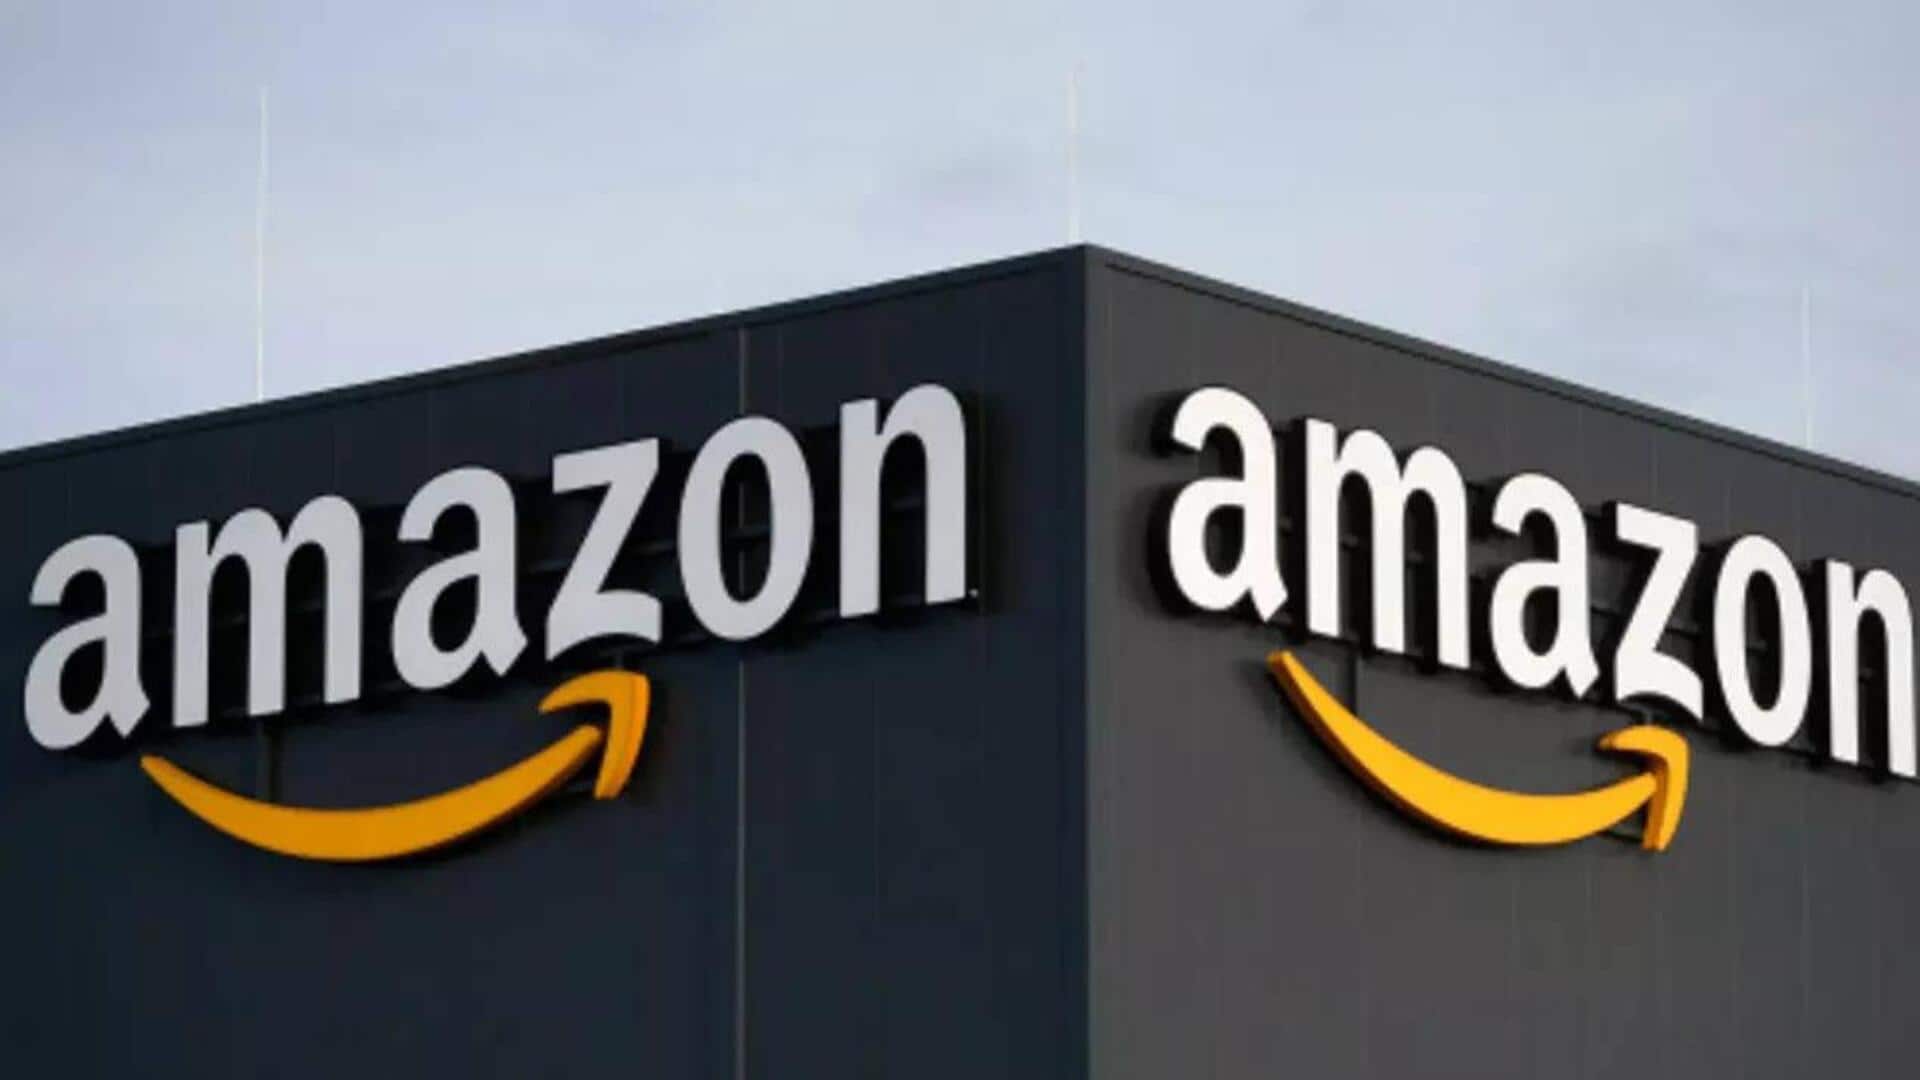 Amazon scraps additional 2% fee for Seller Fulfilled Prime program